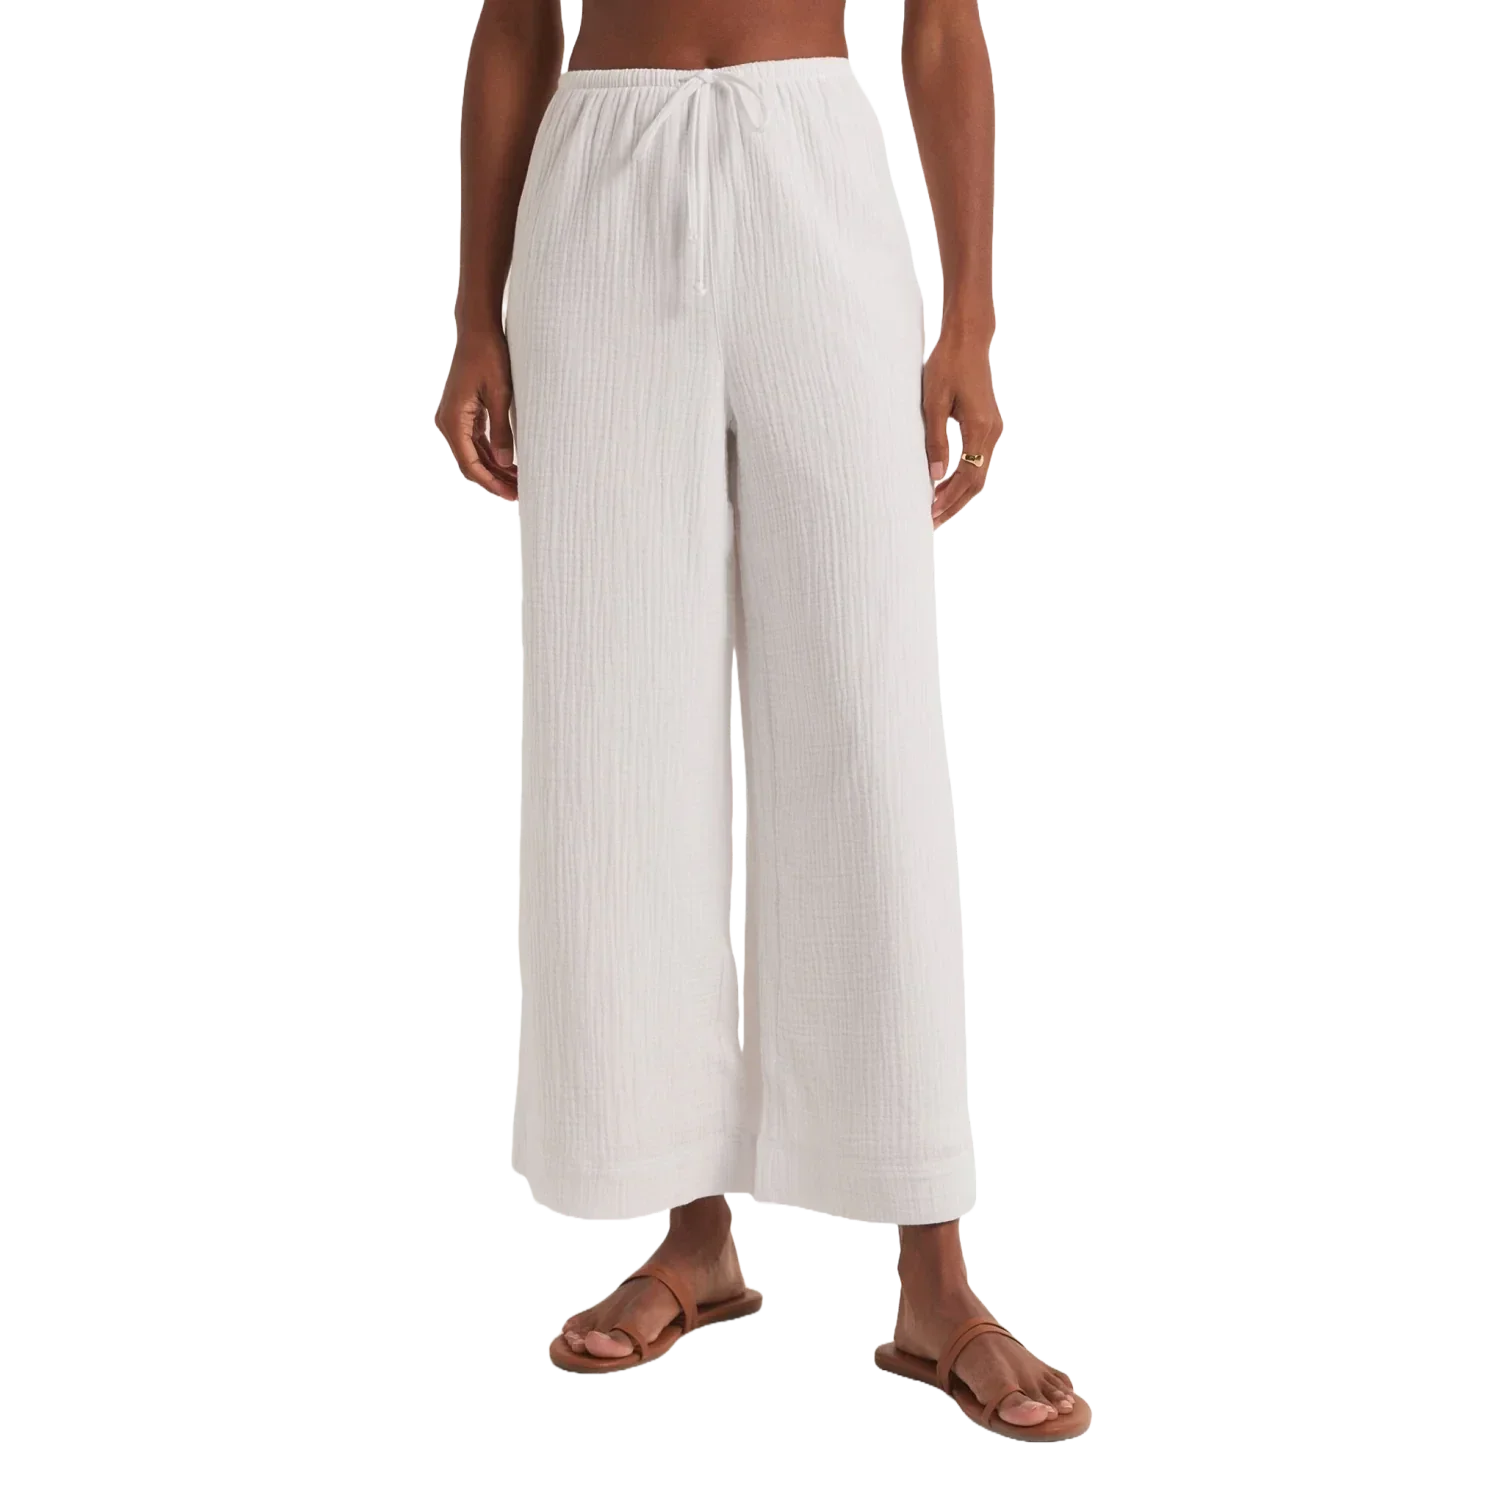 Z Supply 02. WOMENS APPAREL - WOMENS PANTS - WOMENS PANTS CASUAL Women's Barbados Gauze Pant WHT WHITE